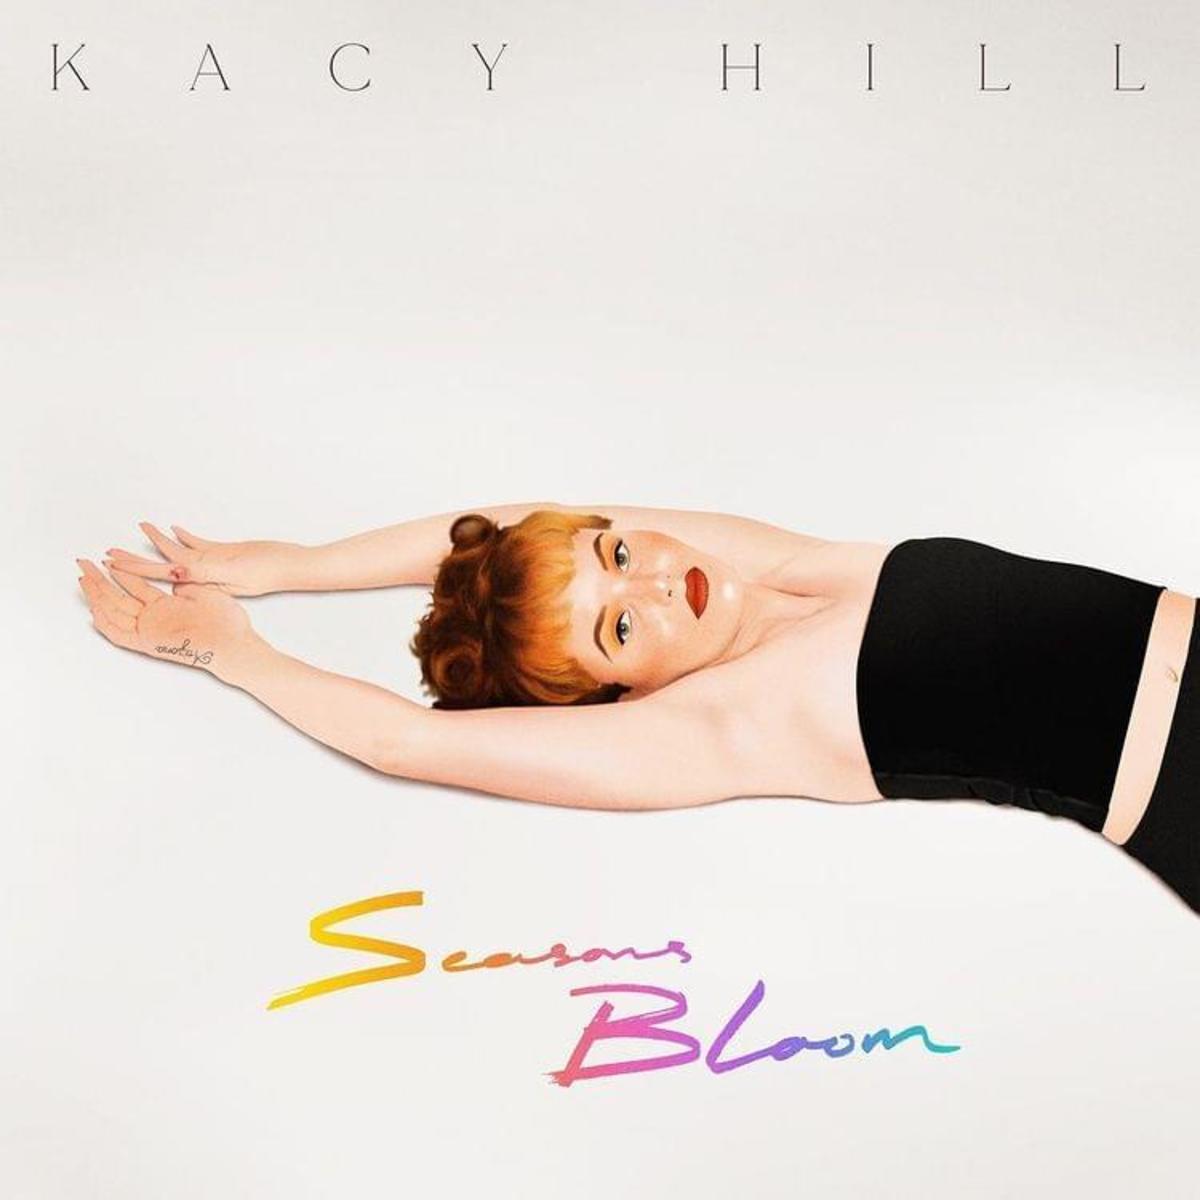 Kacy Hill - Seasons Bloom mP3